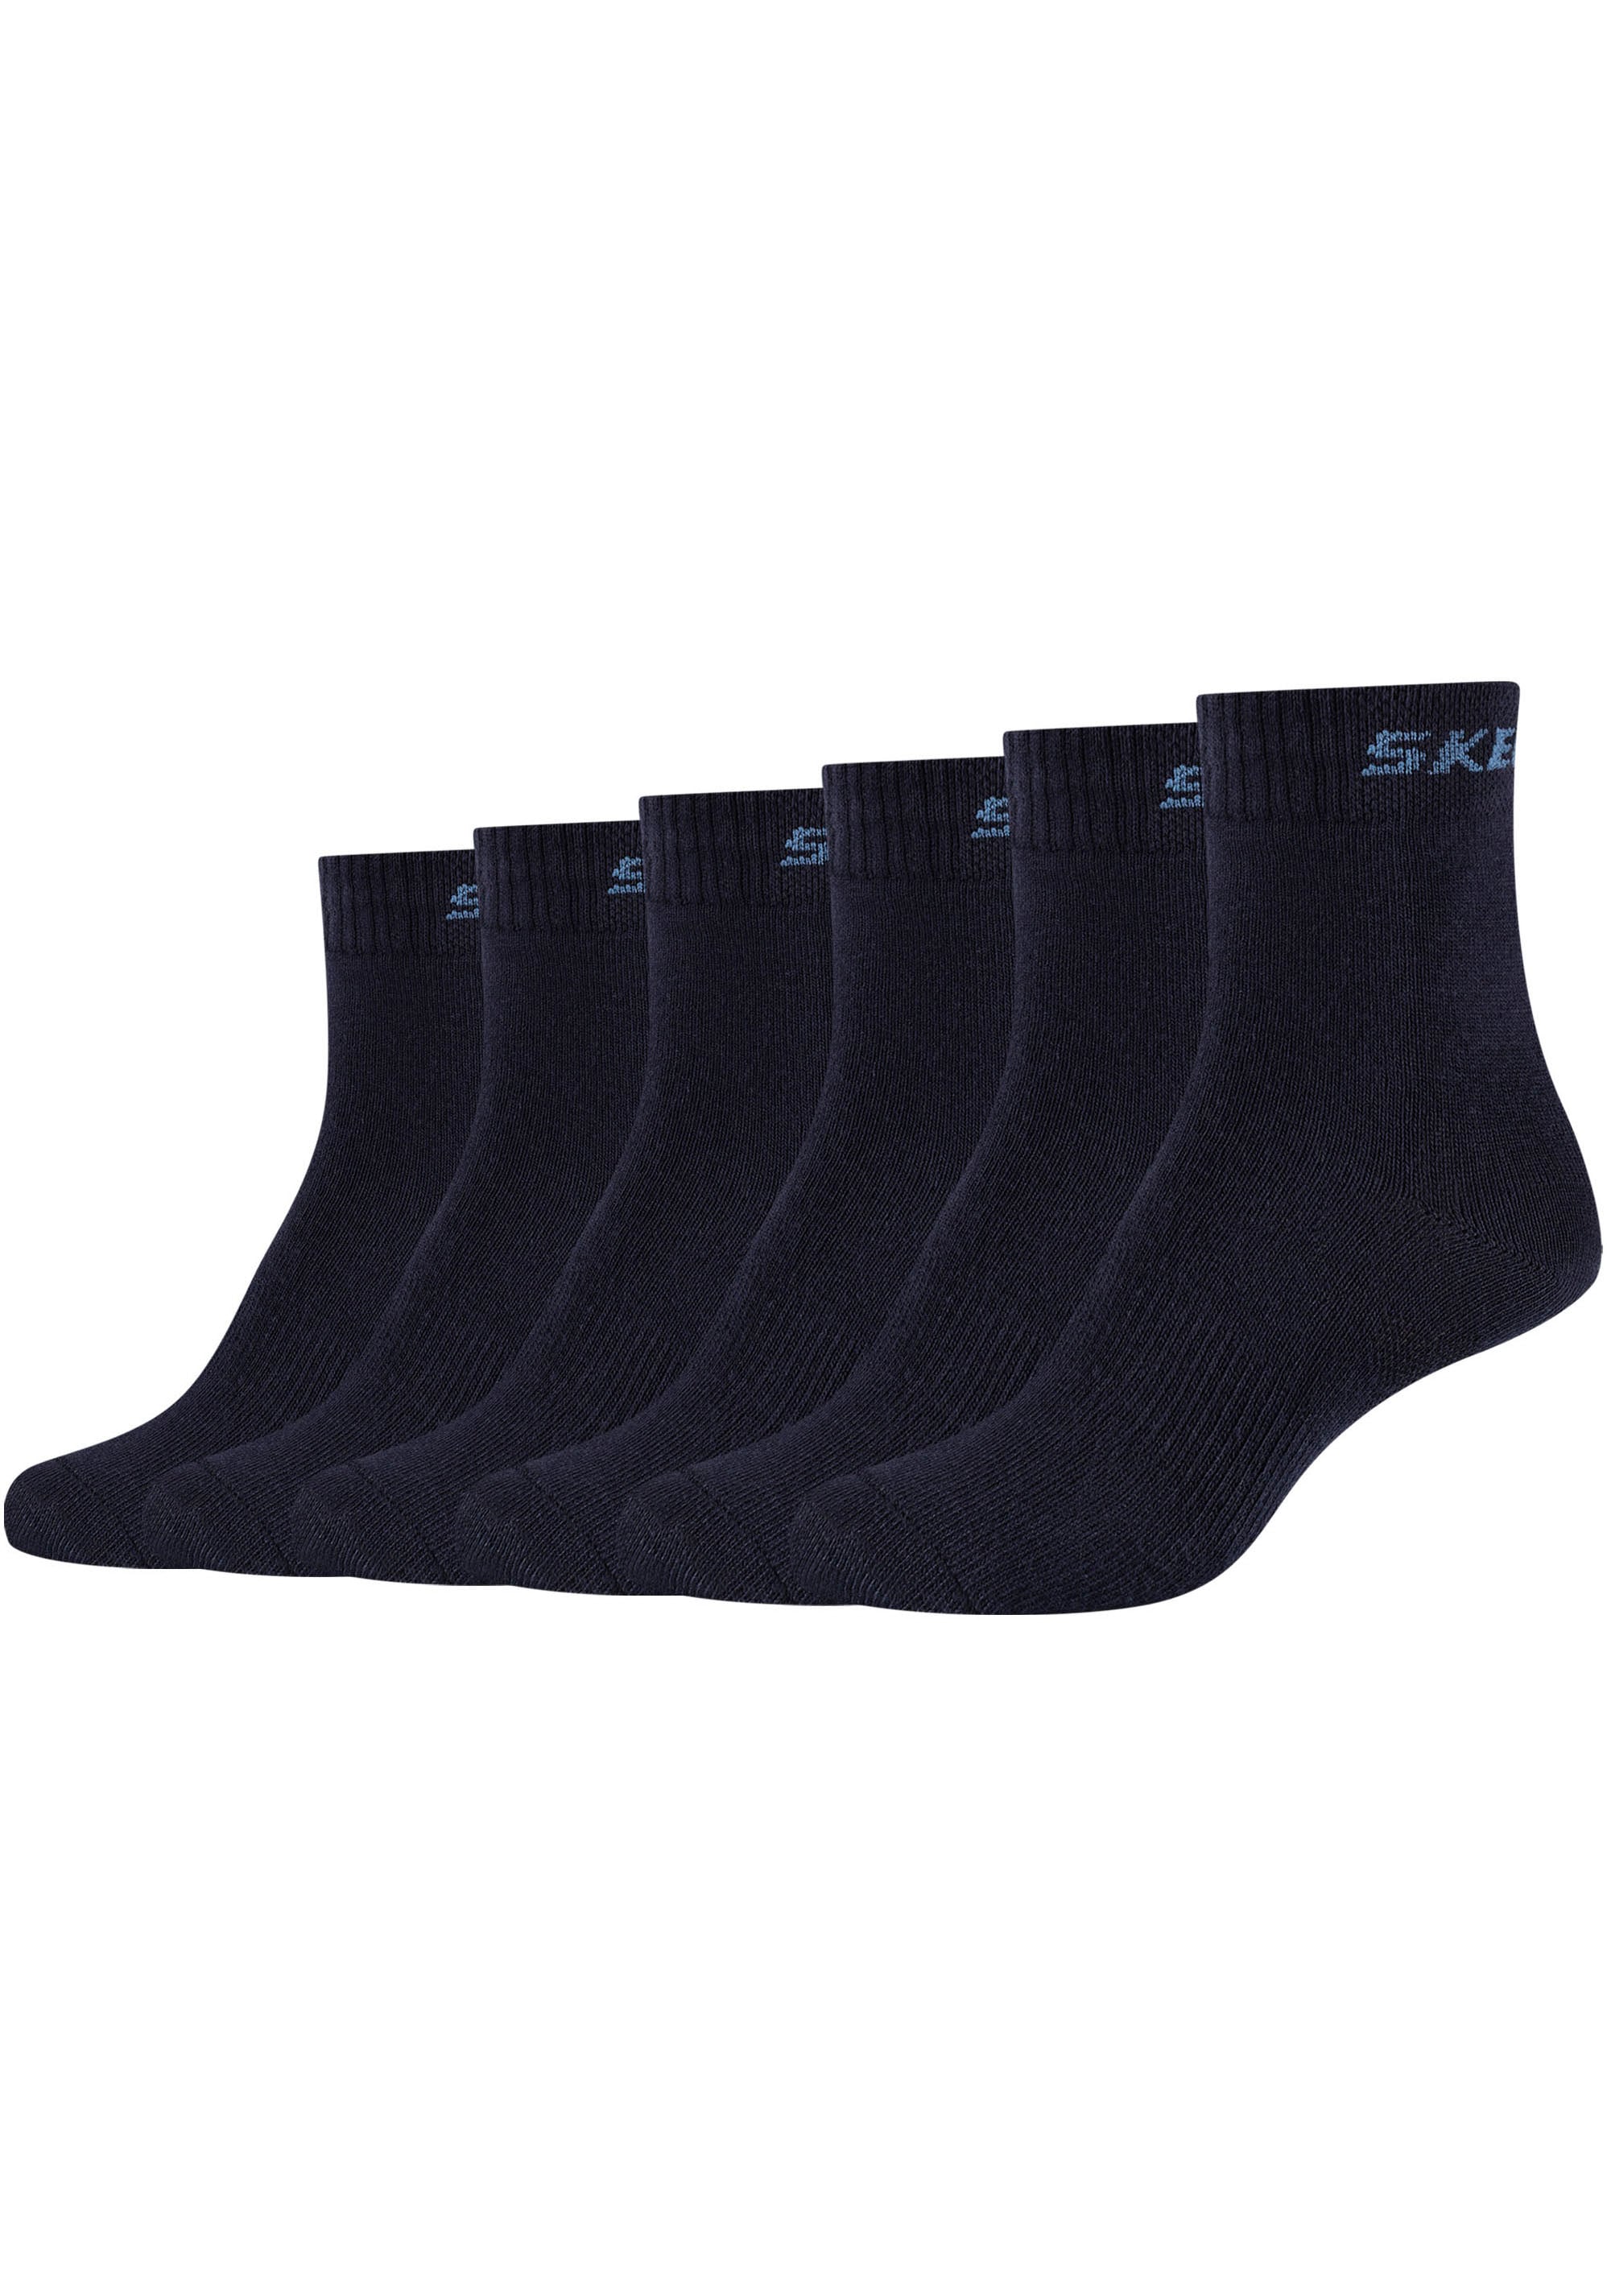 Socken, (Packung, 6 Paar), Mittelfussunterstützung gibt Stabilität